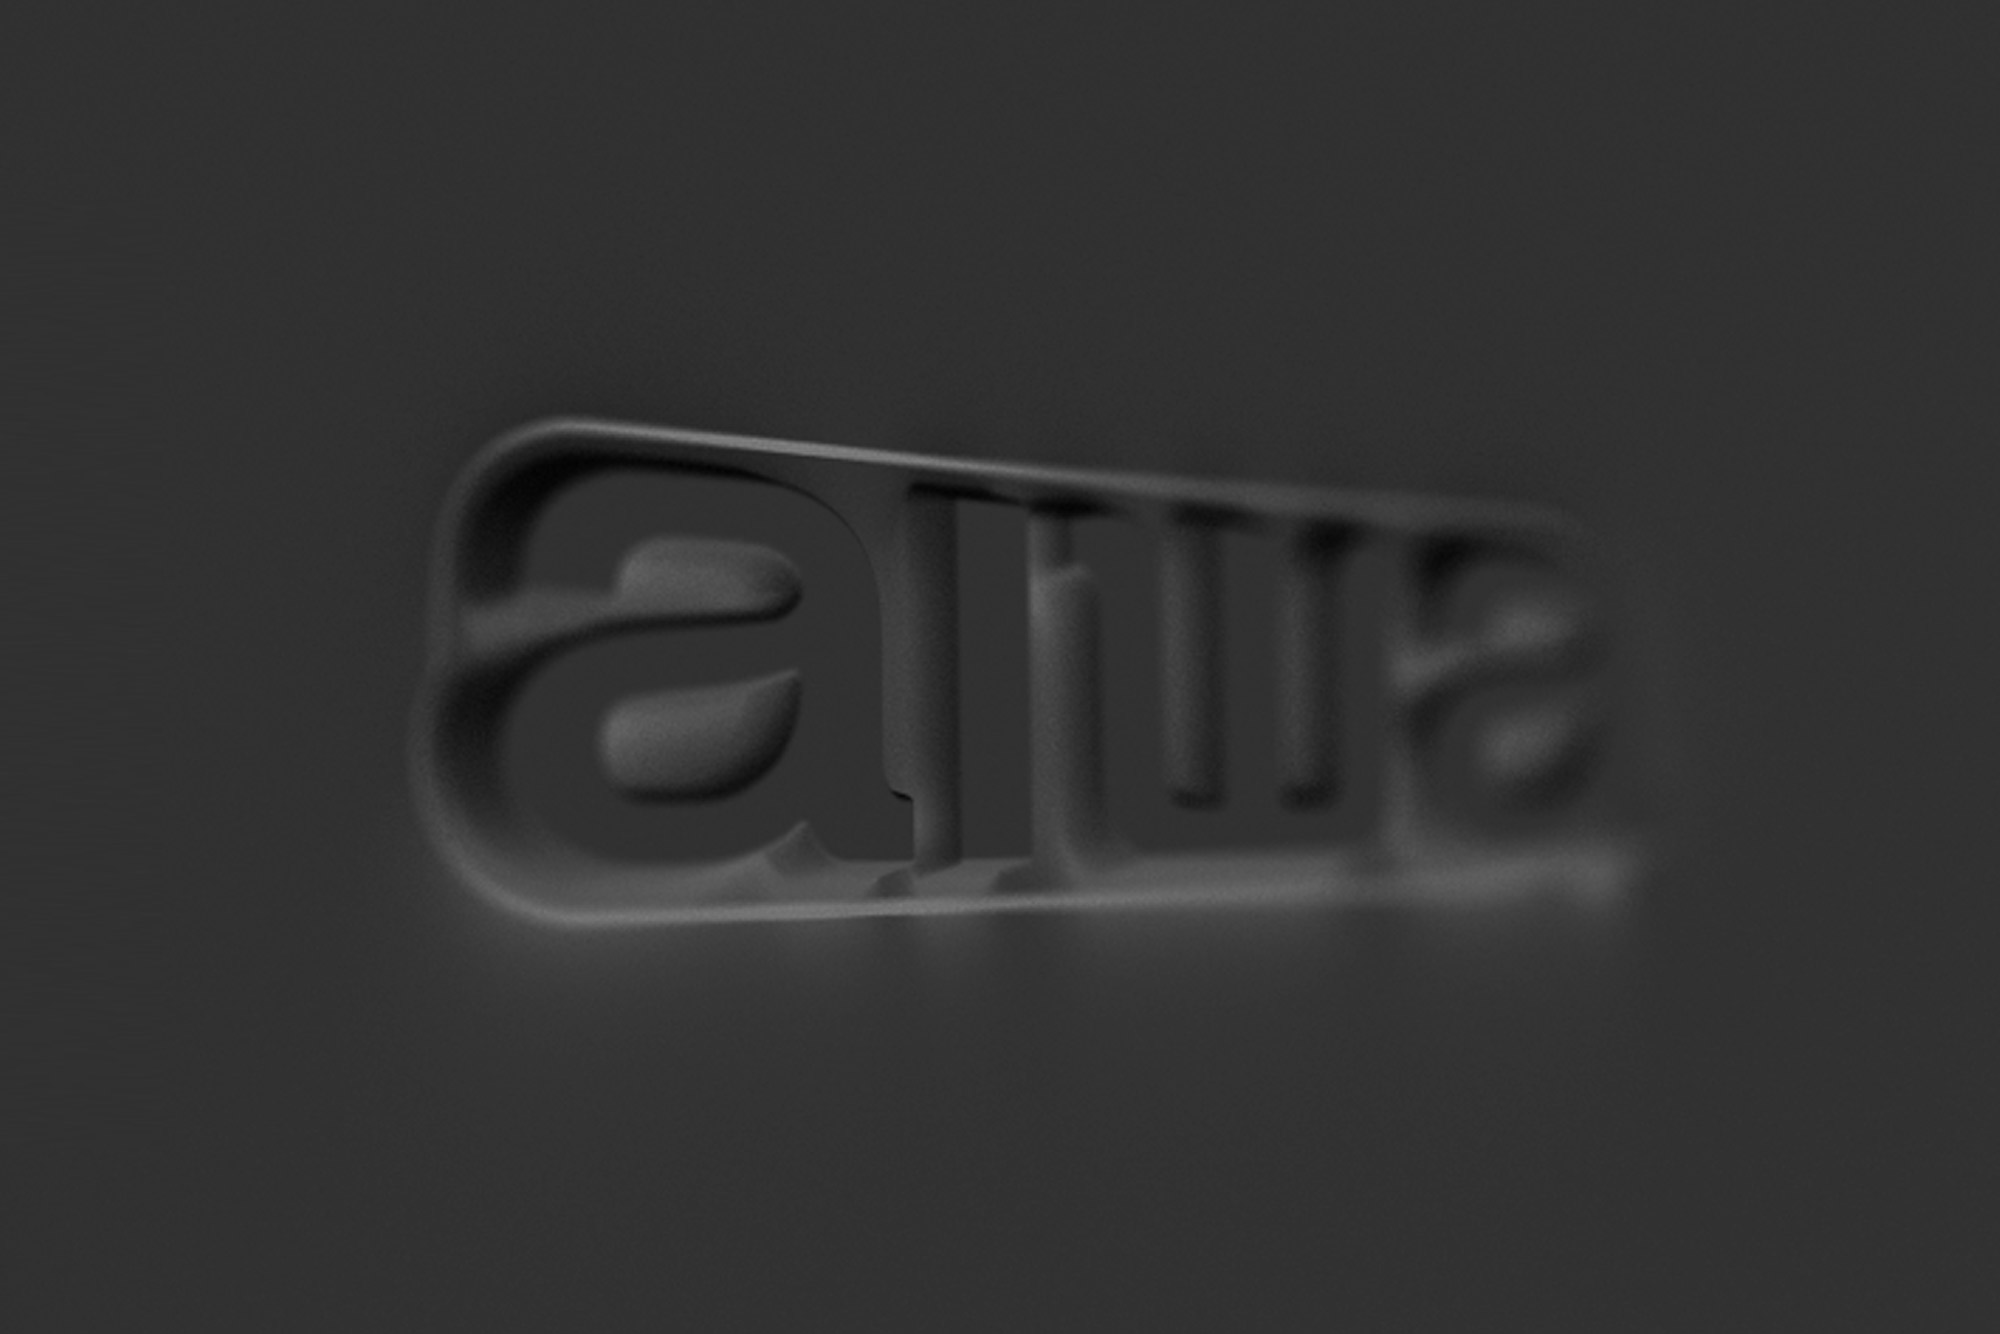 Client logo in a dark color on a dark background.